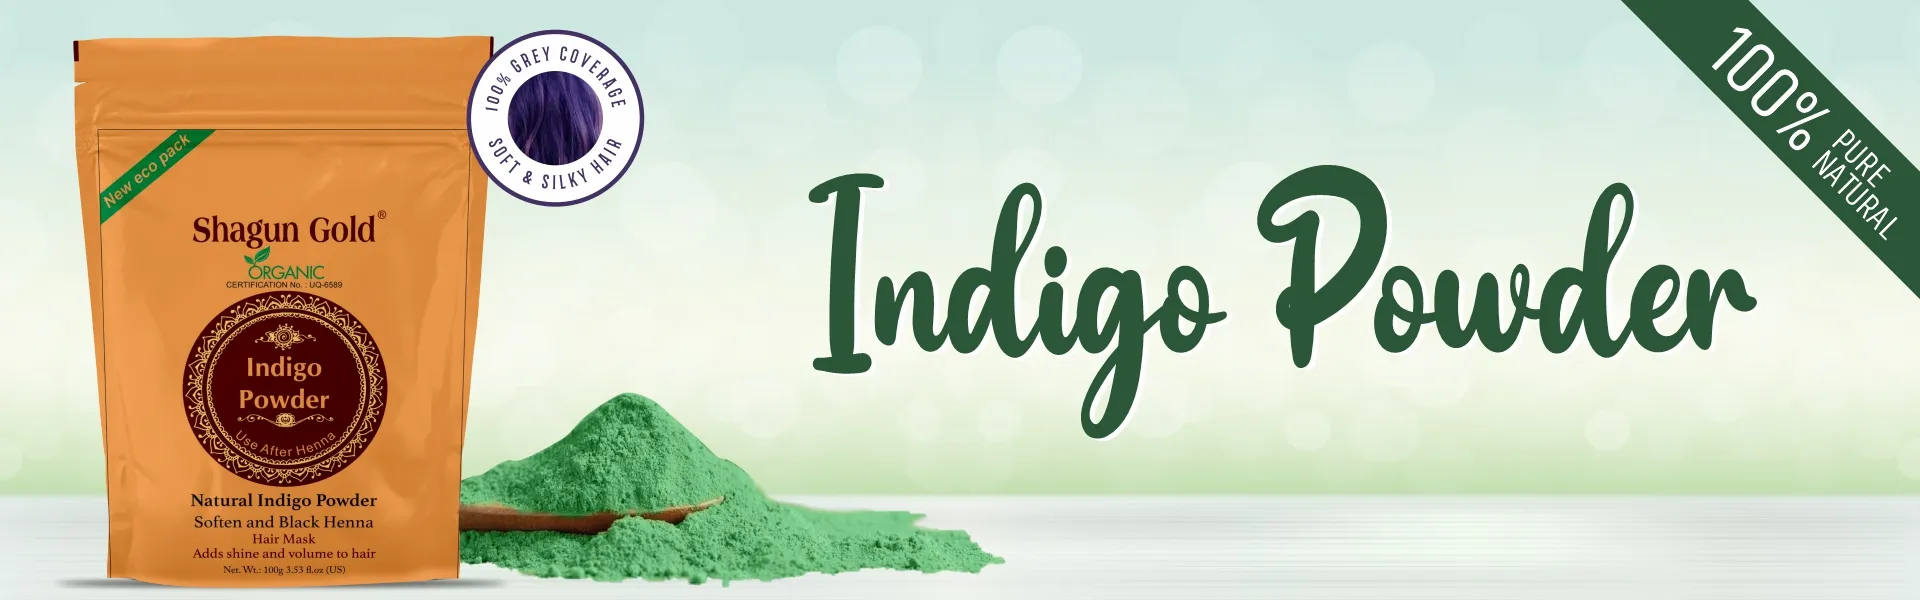 Indigo powder banner- www.dkihenna.com